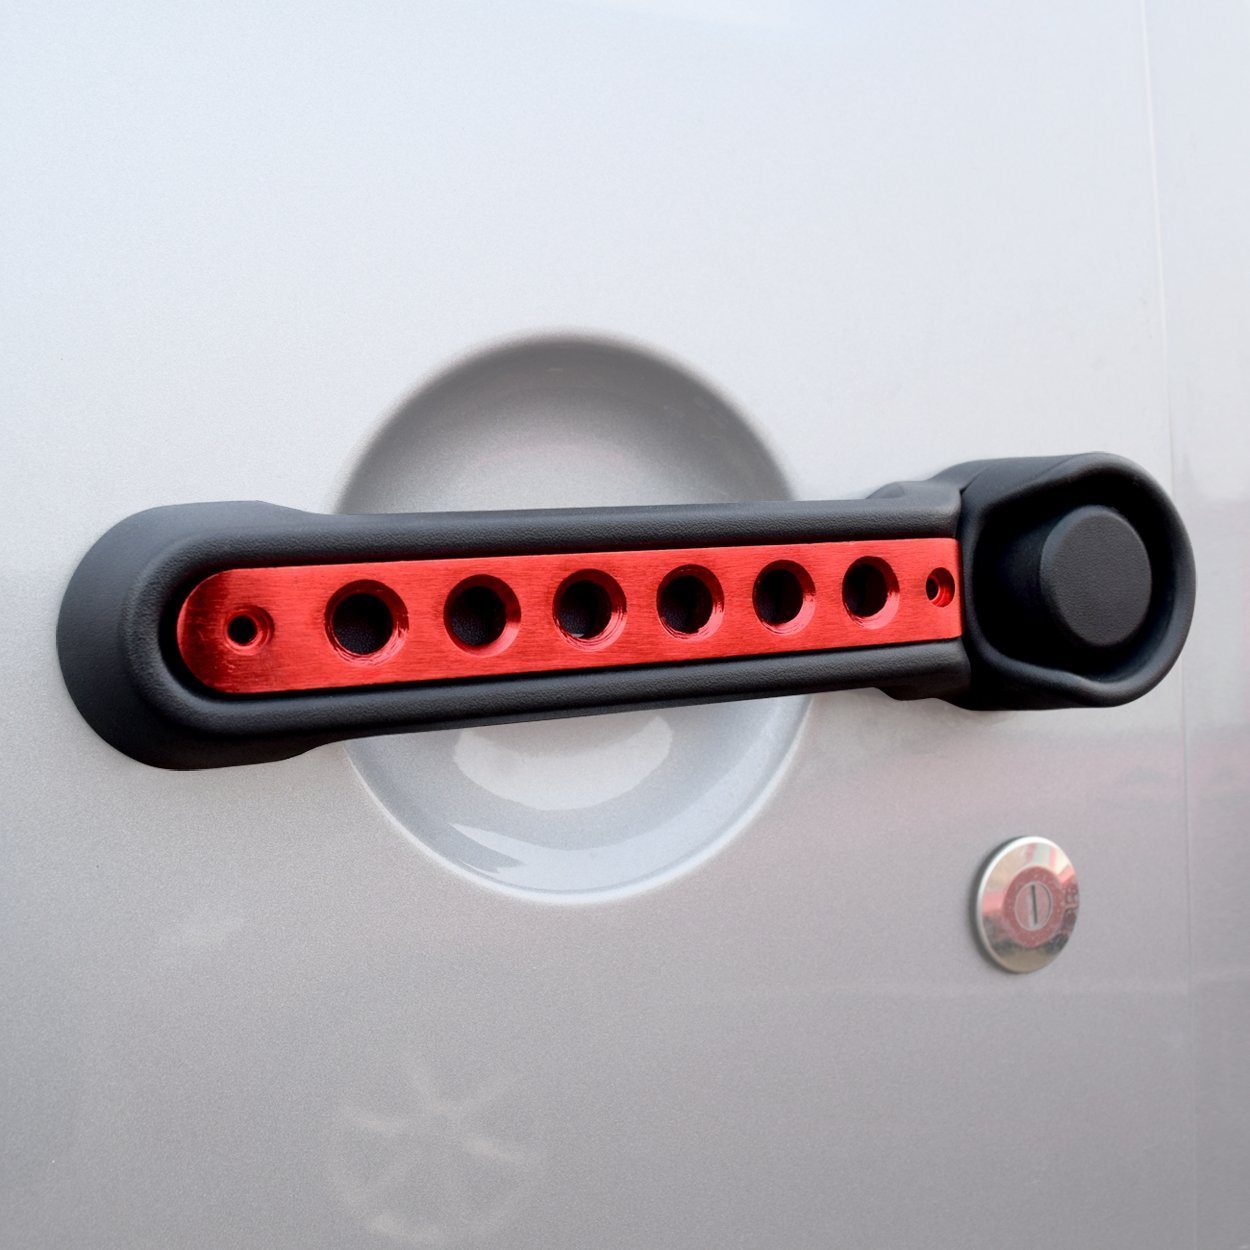 Jeep Wrangler Aluminum Door Grab Handle Inserts Cover